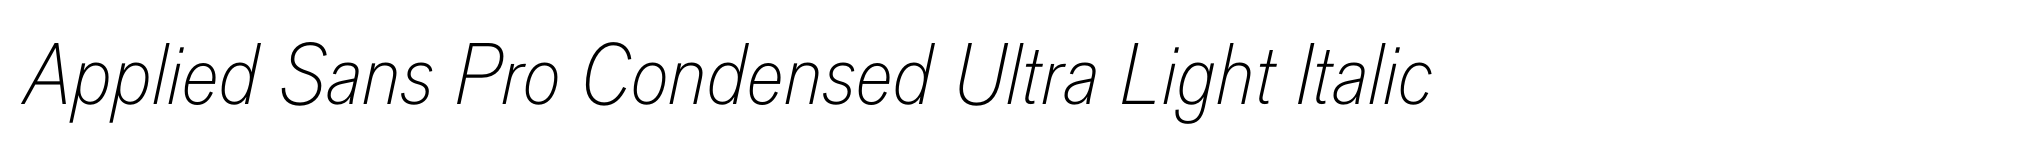 Applied Sans Pro Condensed Ultra Light Italic image